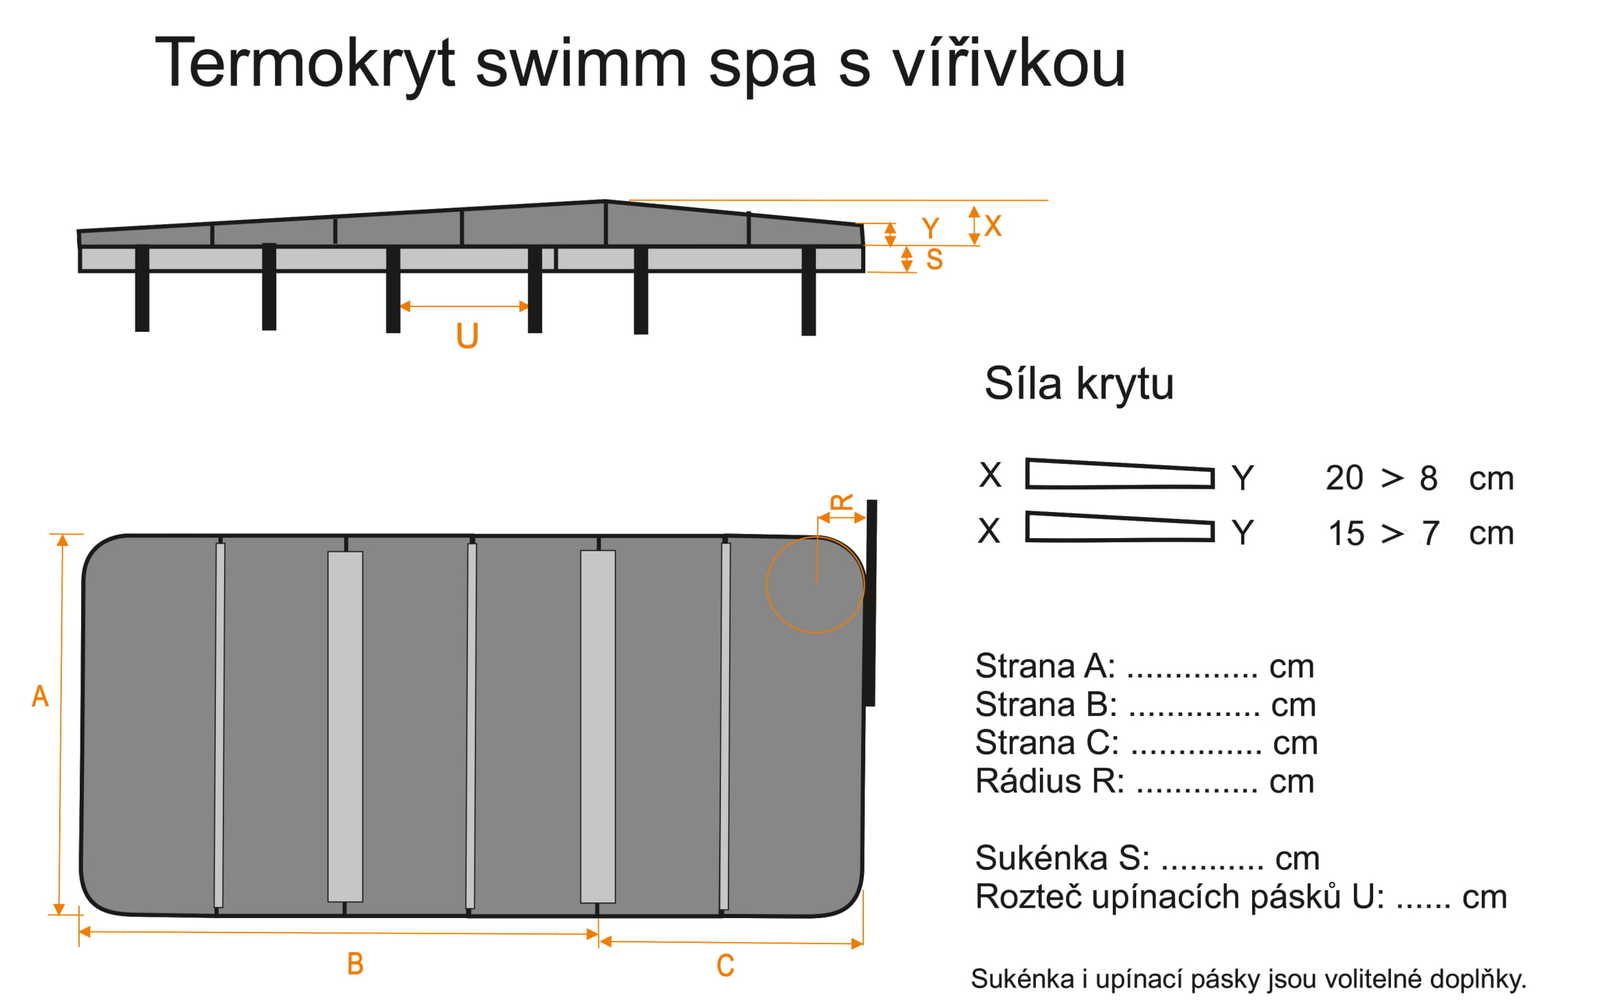 Thermoabdeckung Swimm Spa mit Whirlpool